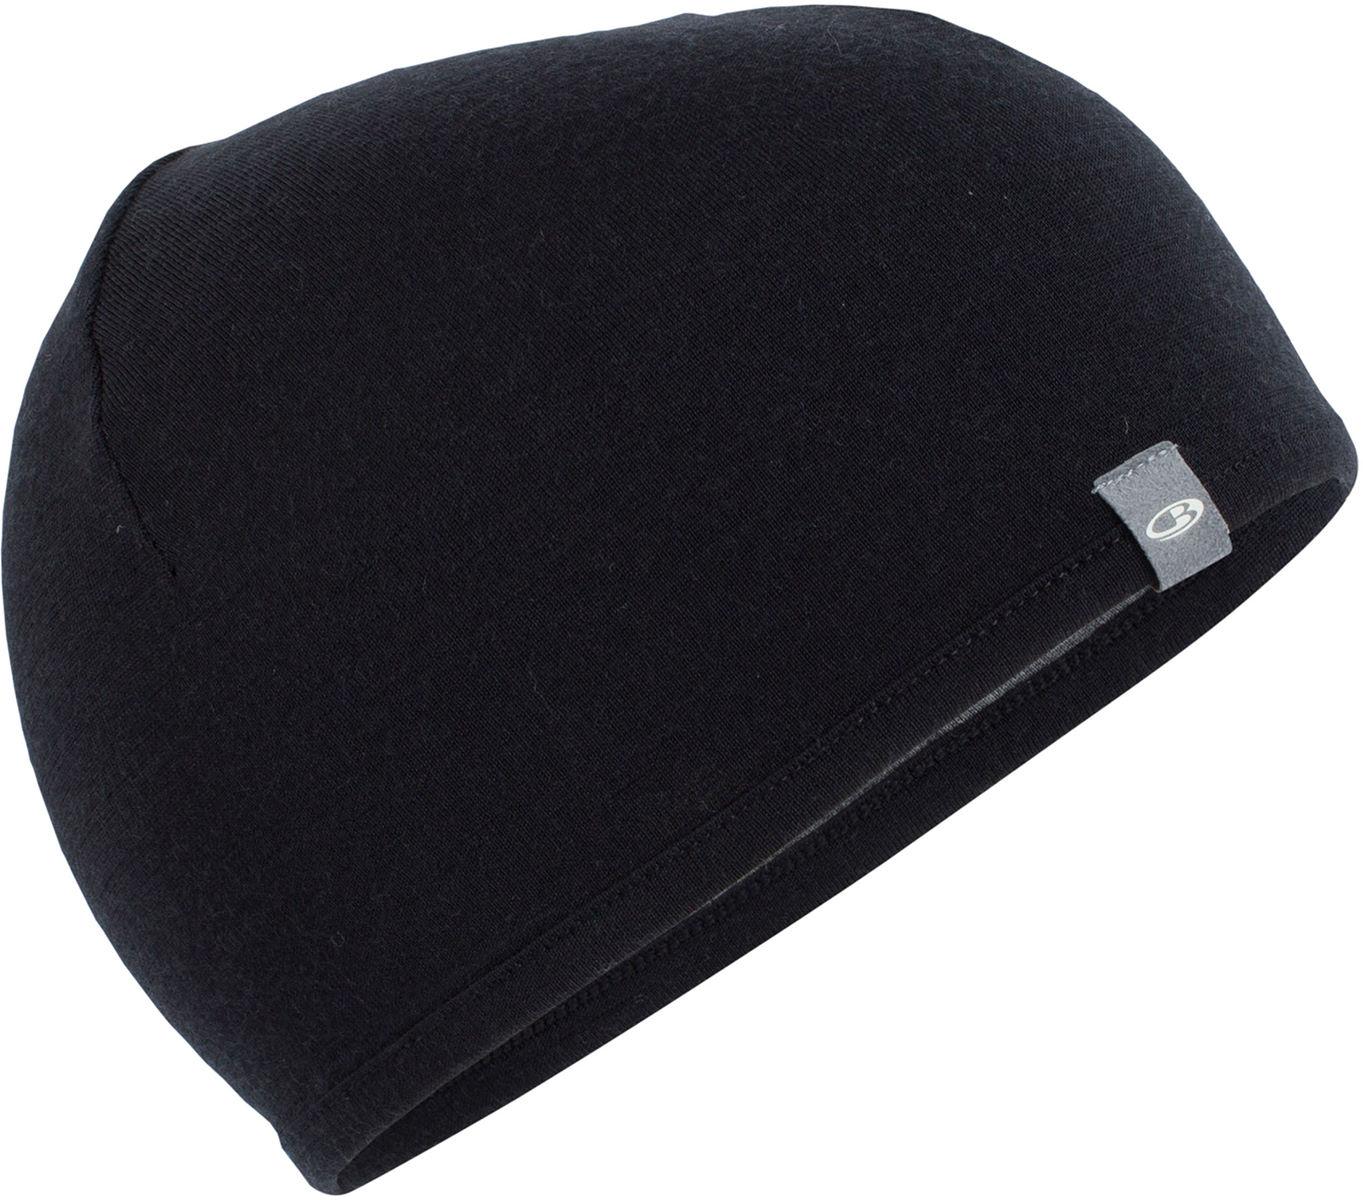 Icebreaker Merino Pocket Hat - Black/gritstone Heather